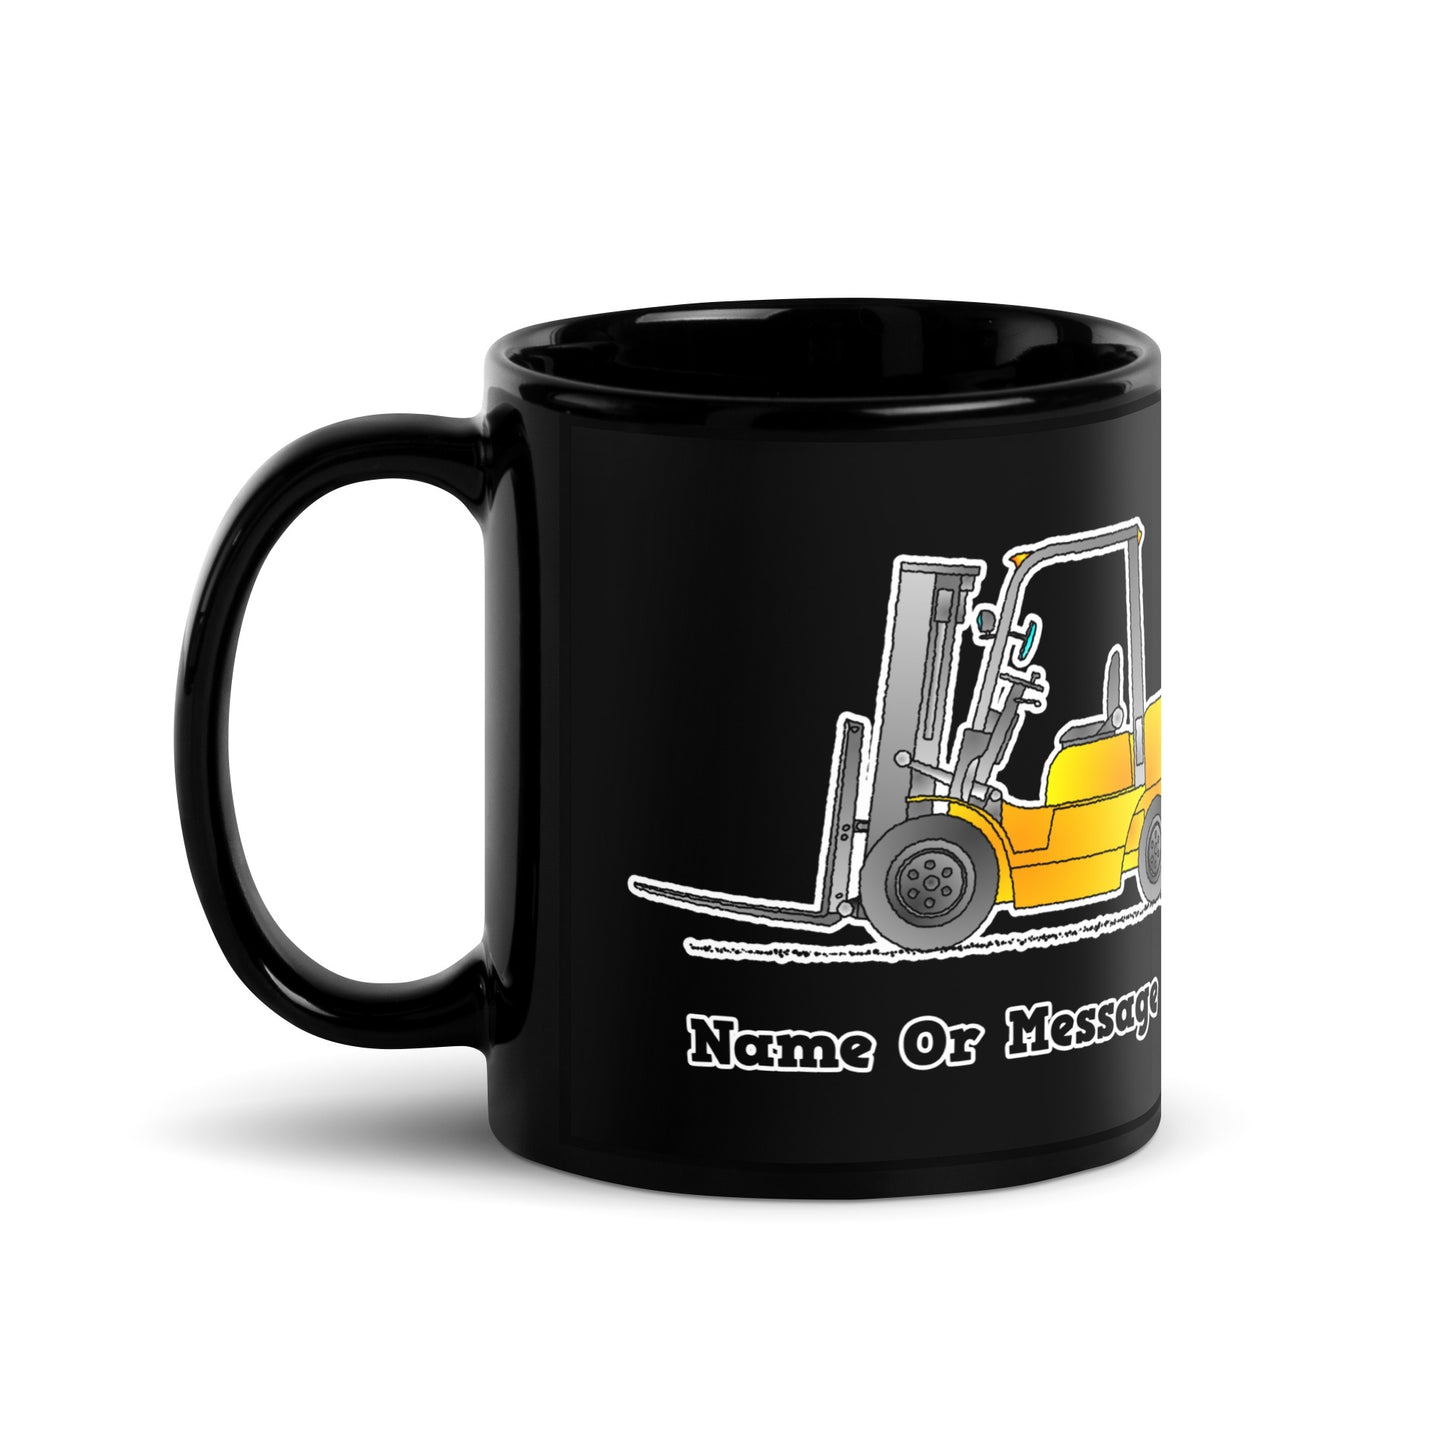 Personalized Forklift Truck Mug, Black Ceramic